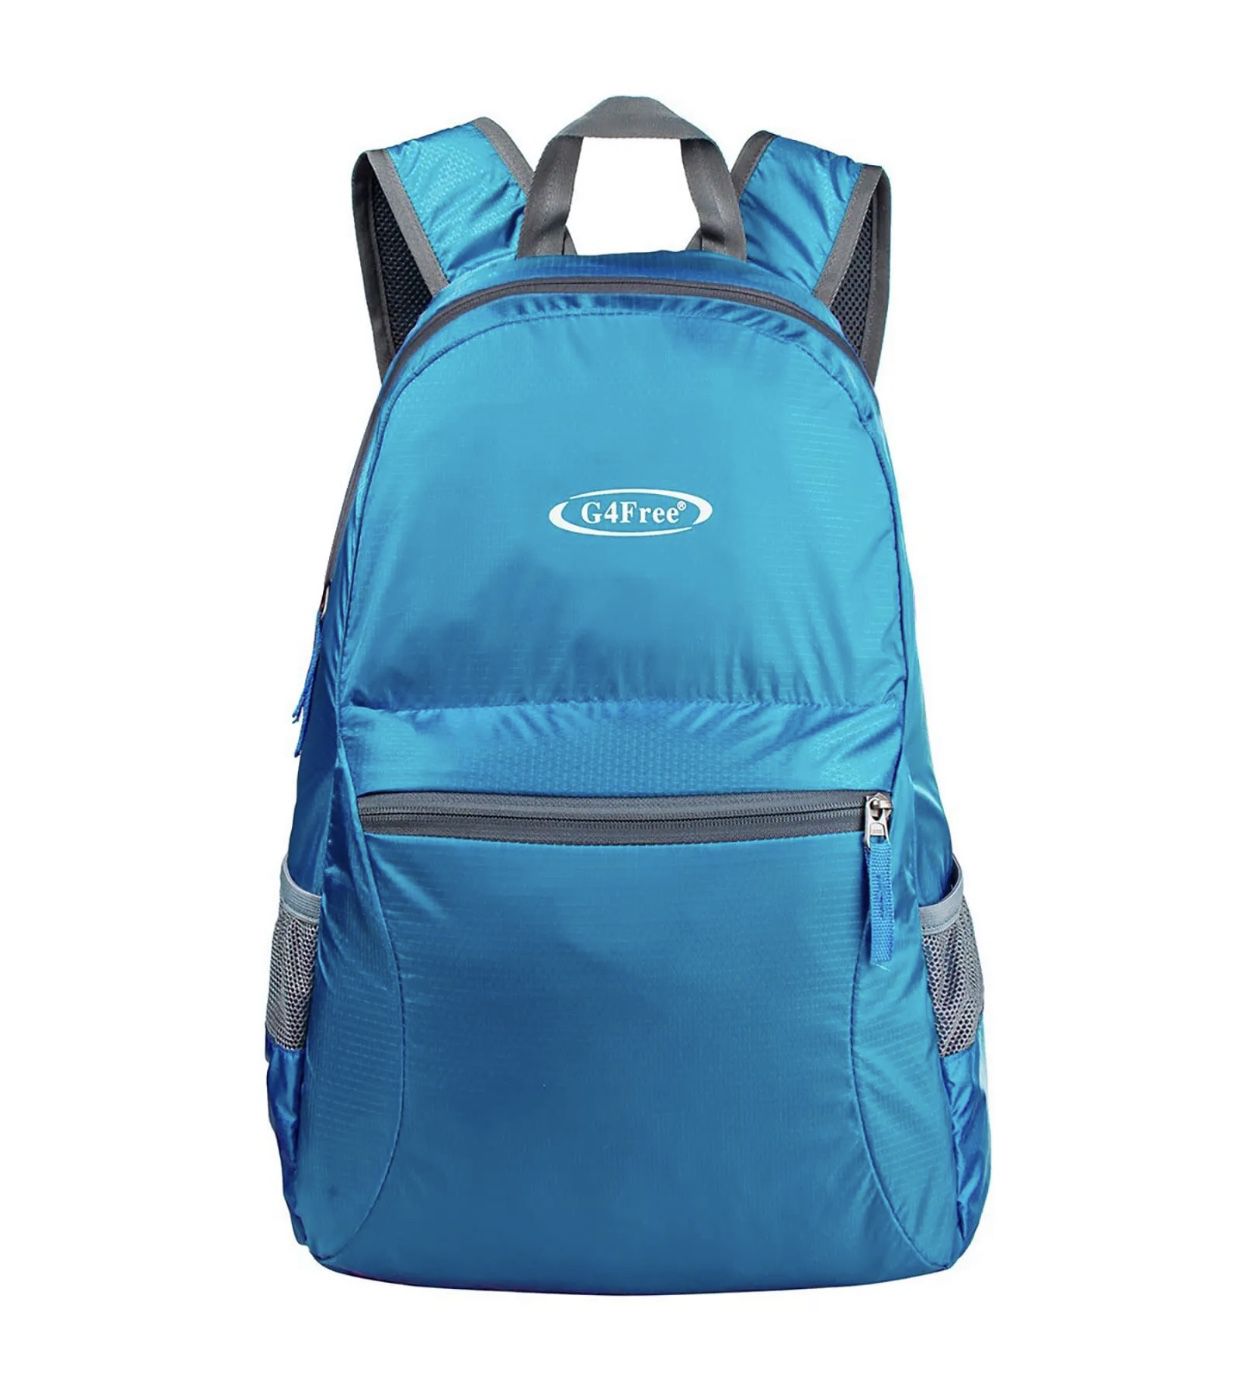 G4Free 20L Lightweight Packable Backpack Travel Hiking Daypack Foldable Light Blue